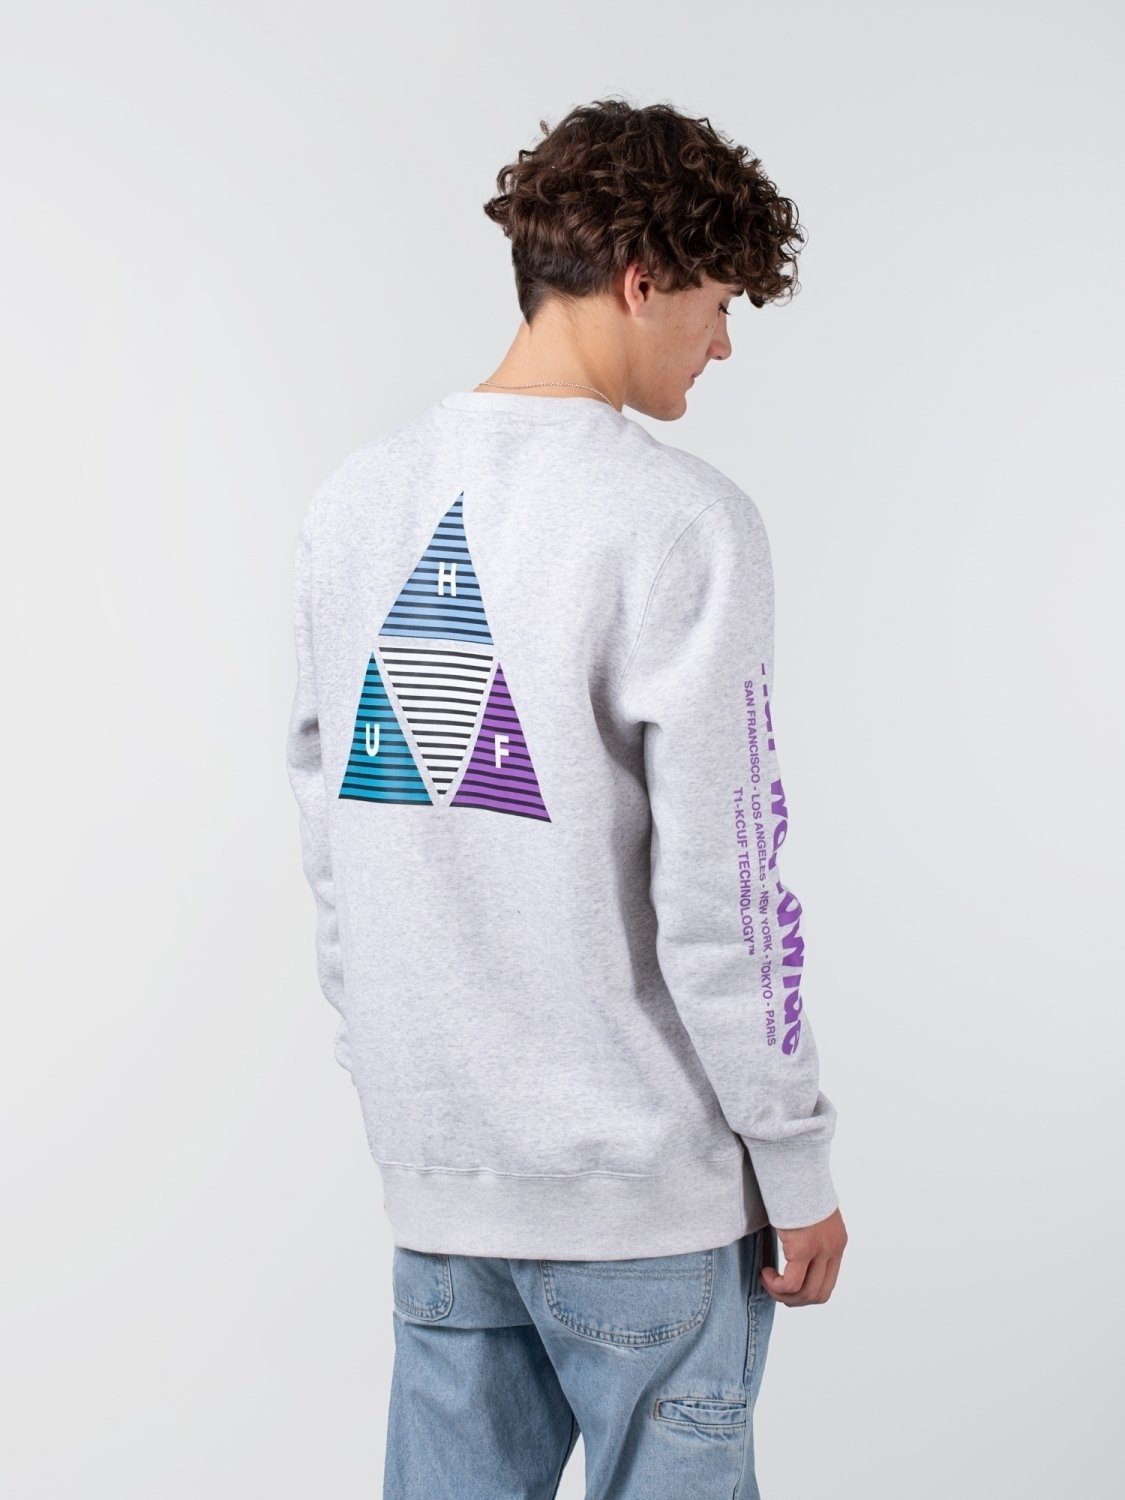 Triple HUF Sweatshirt Heather Triangle Athletic Prism HUF Sweater